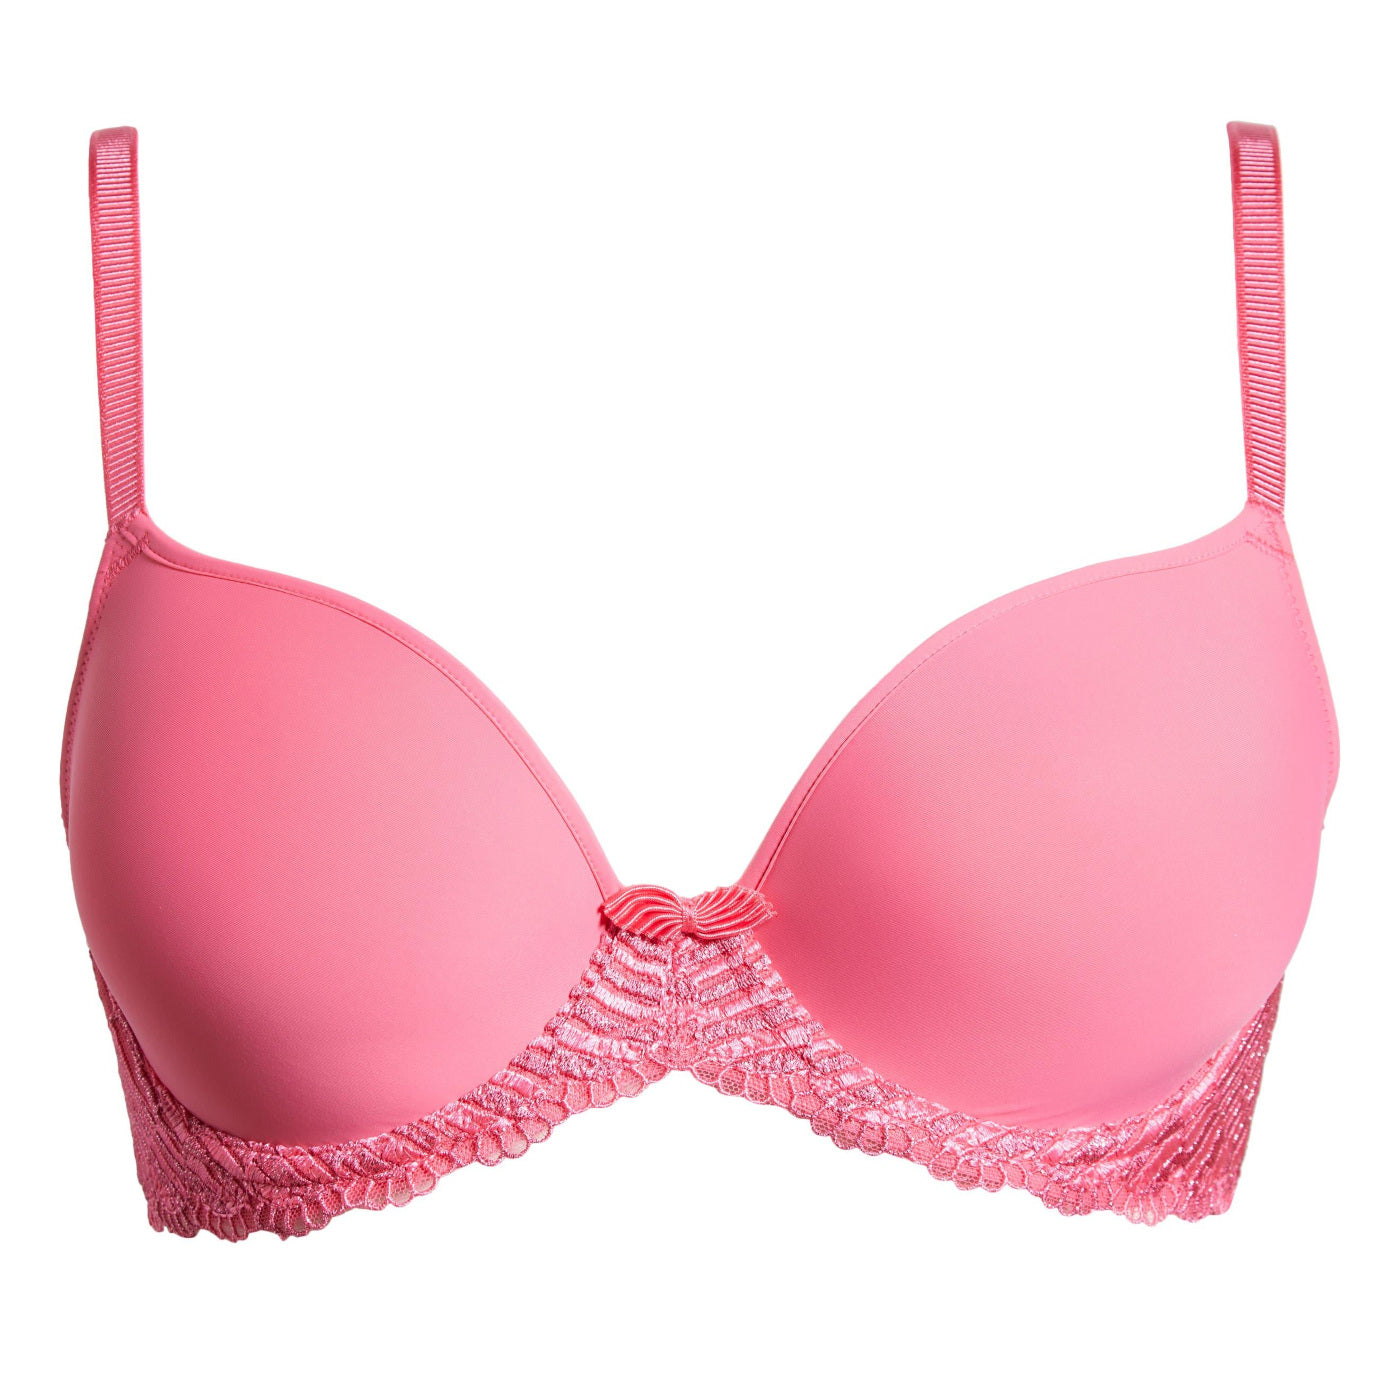 Extension Surge Pink Tube Top 38B+Bras+for+Women Low Stick Bra